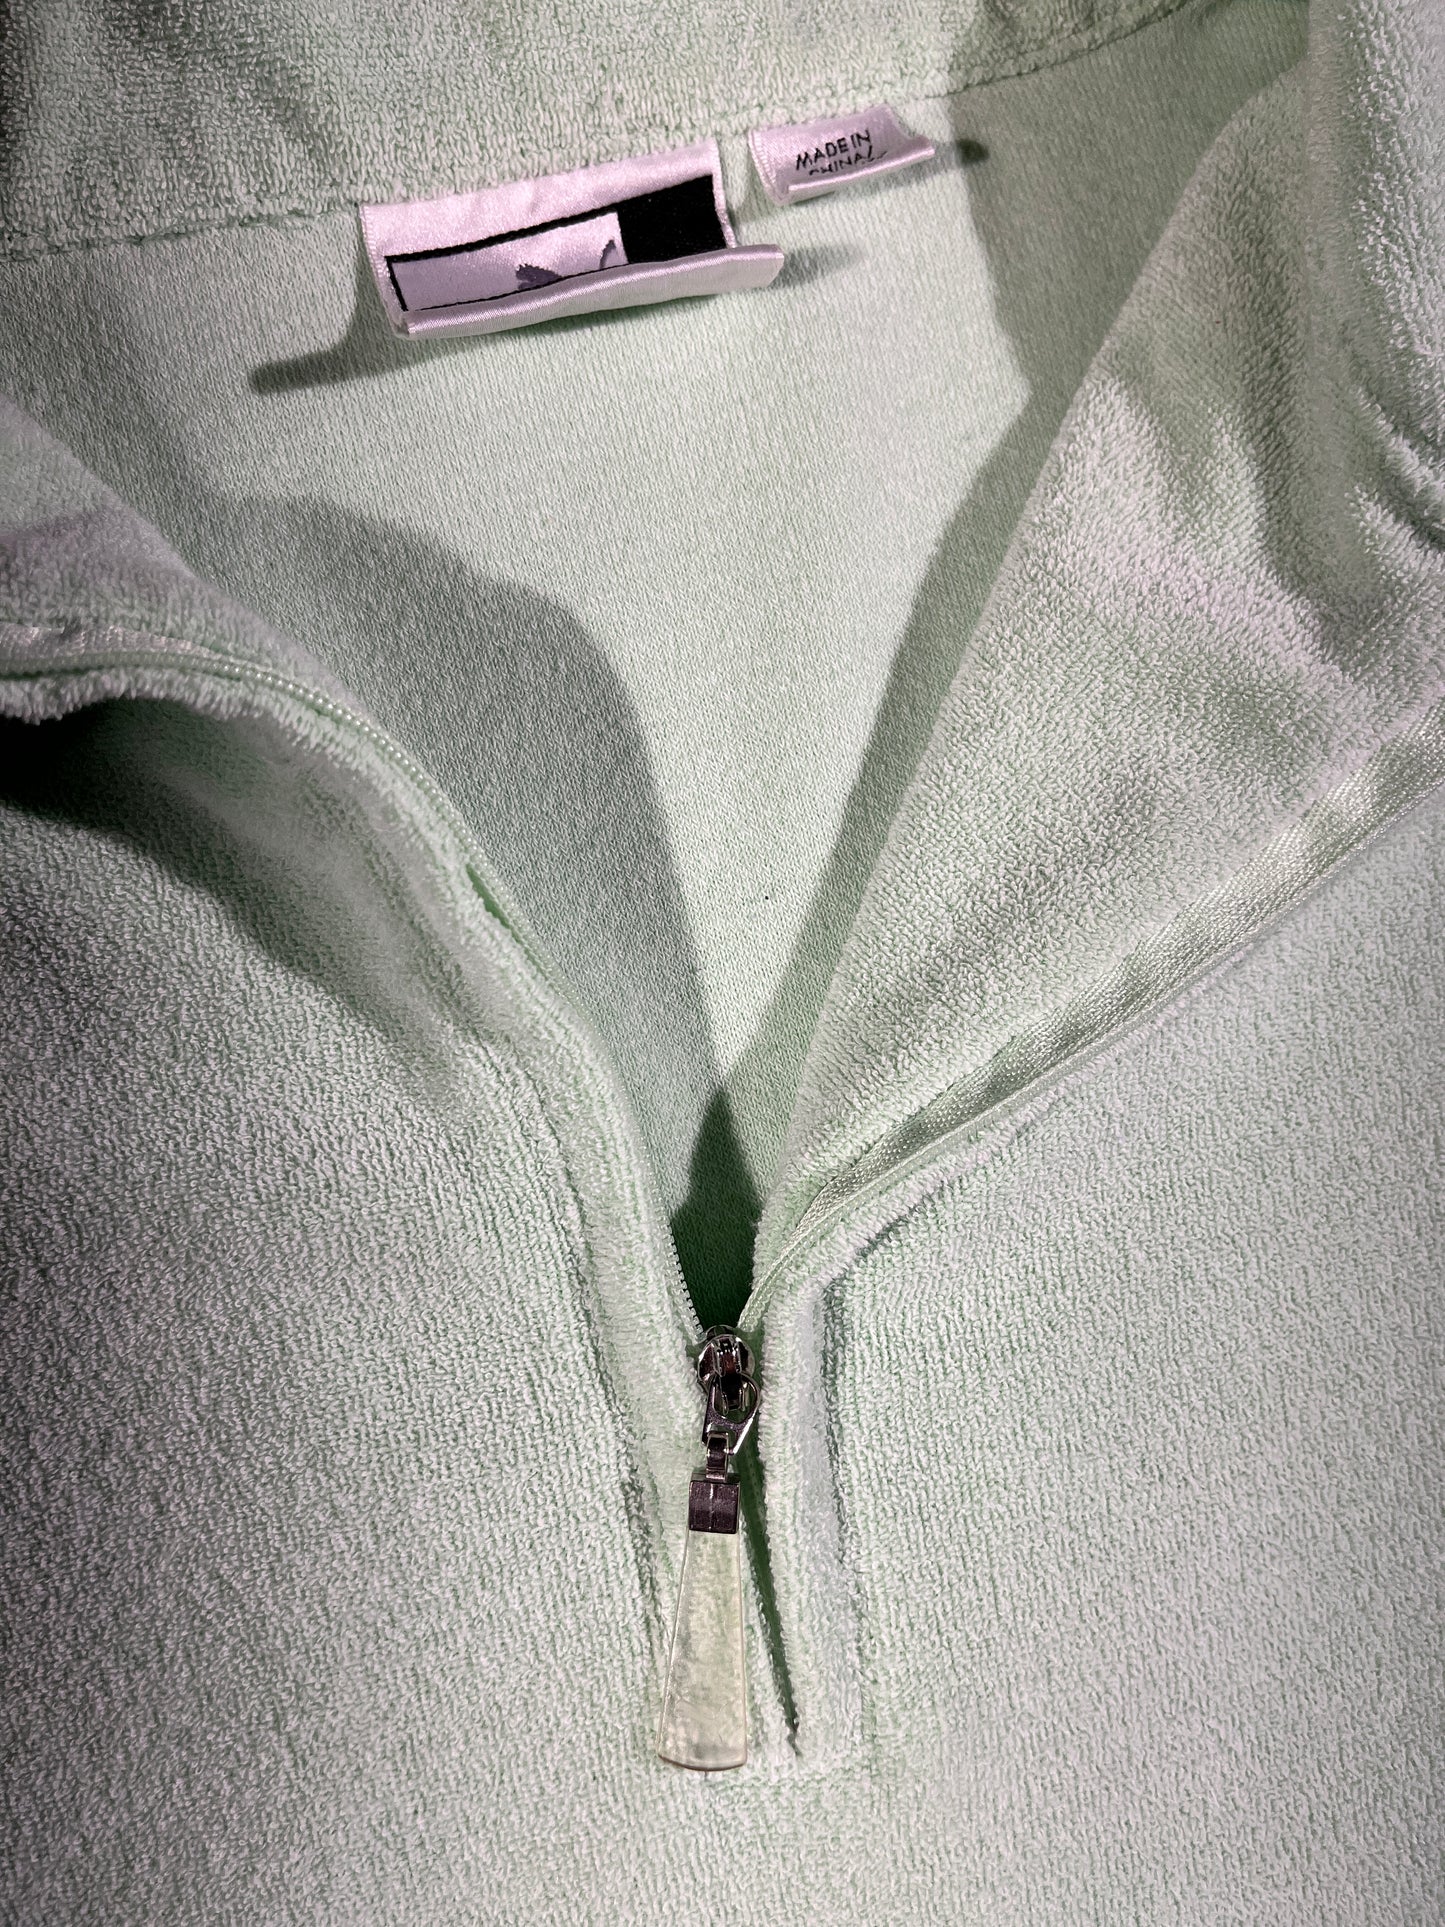 Vintage Puma Polo Shirt Terrycloth Golf Top